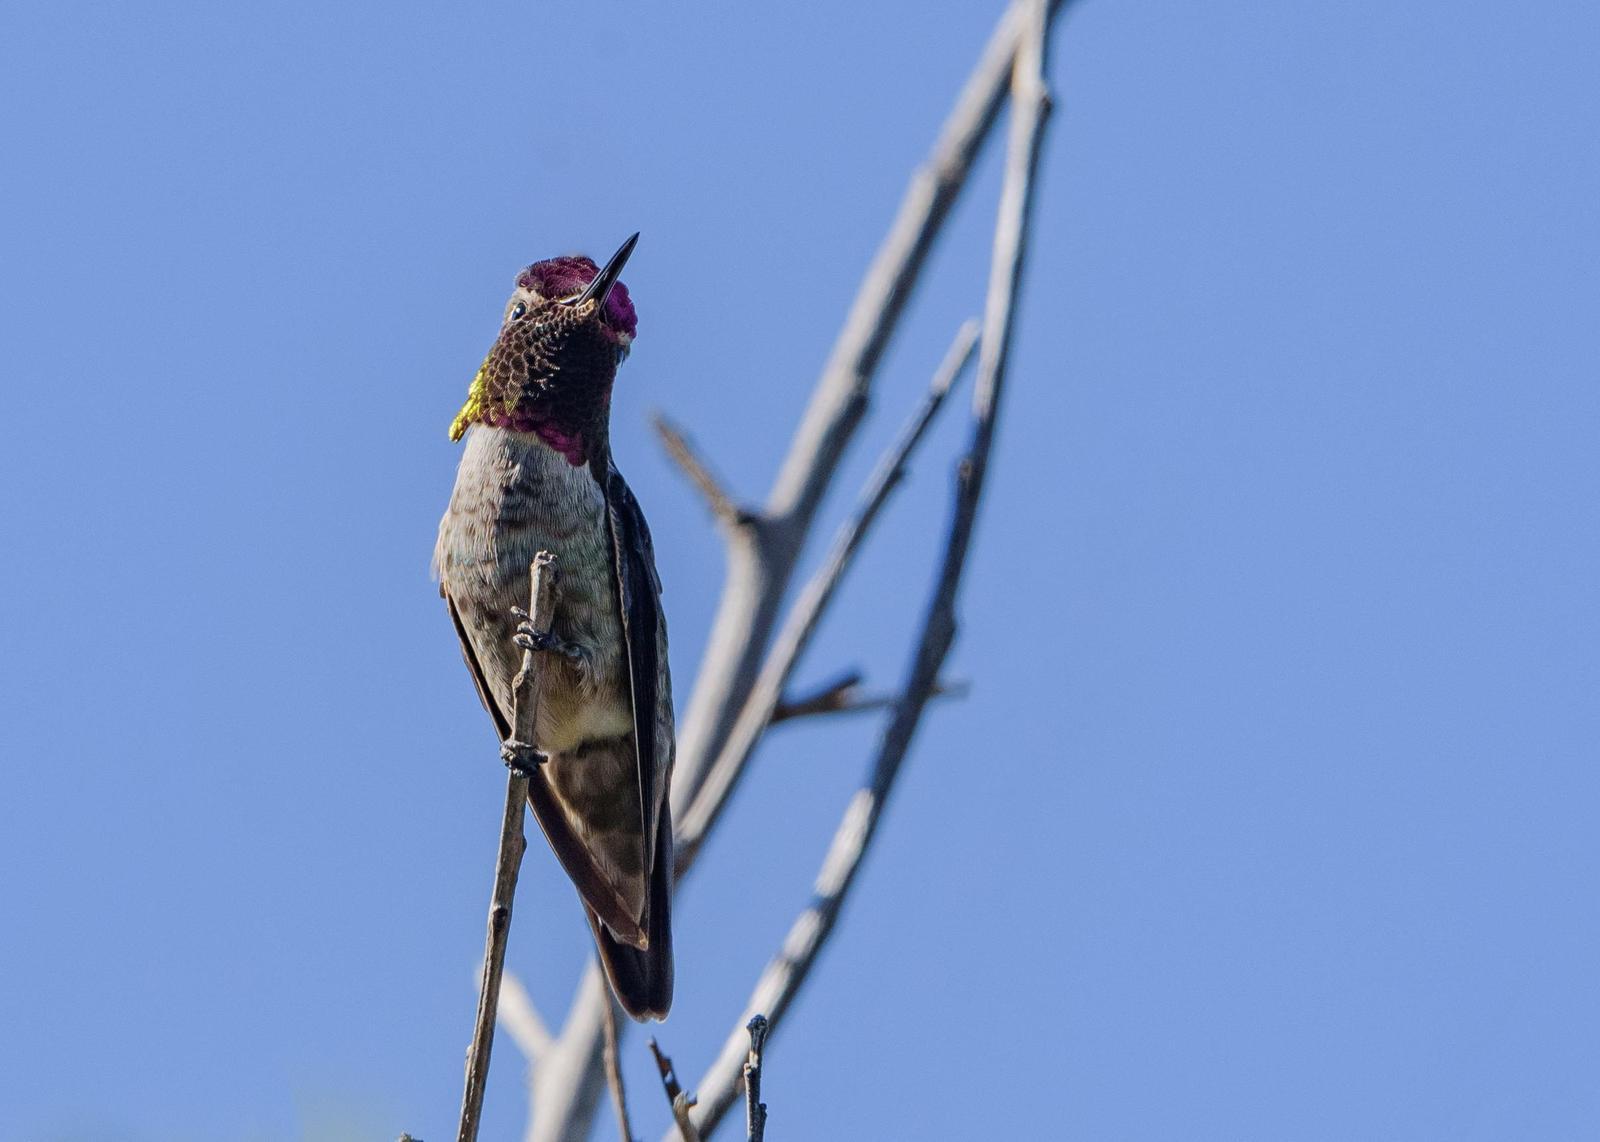 Anna's Hummingbird Photo by Keshava Mysore